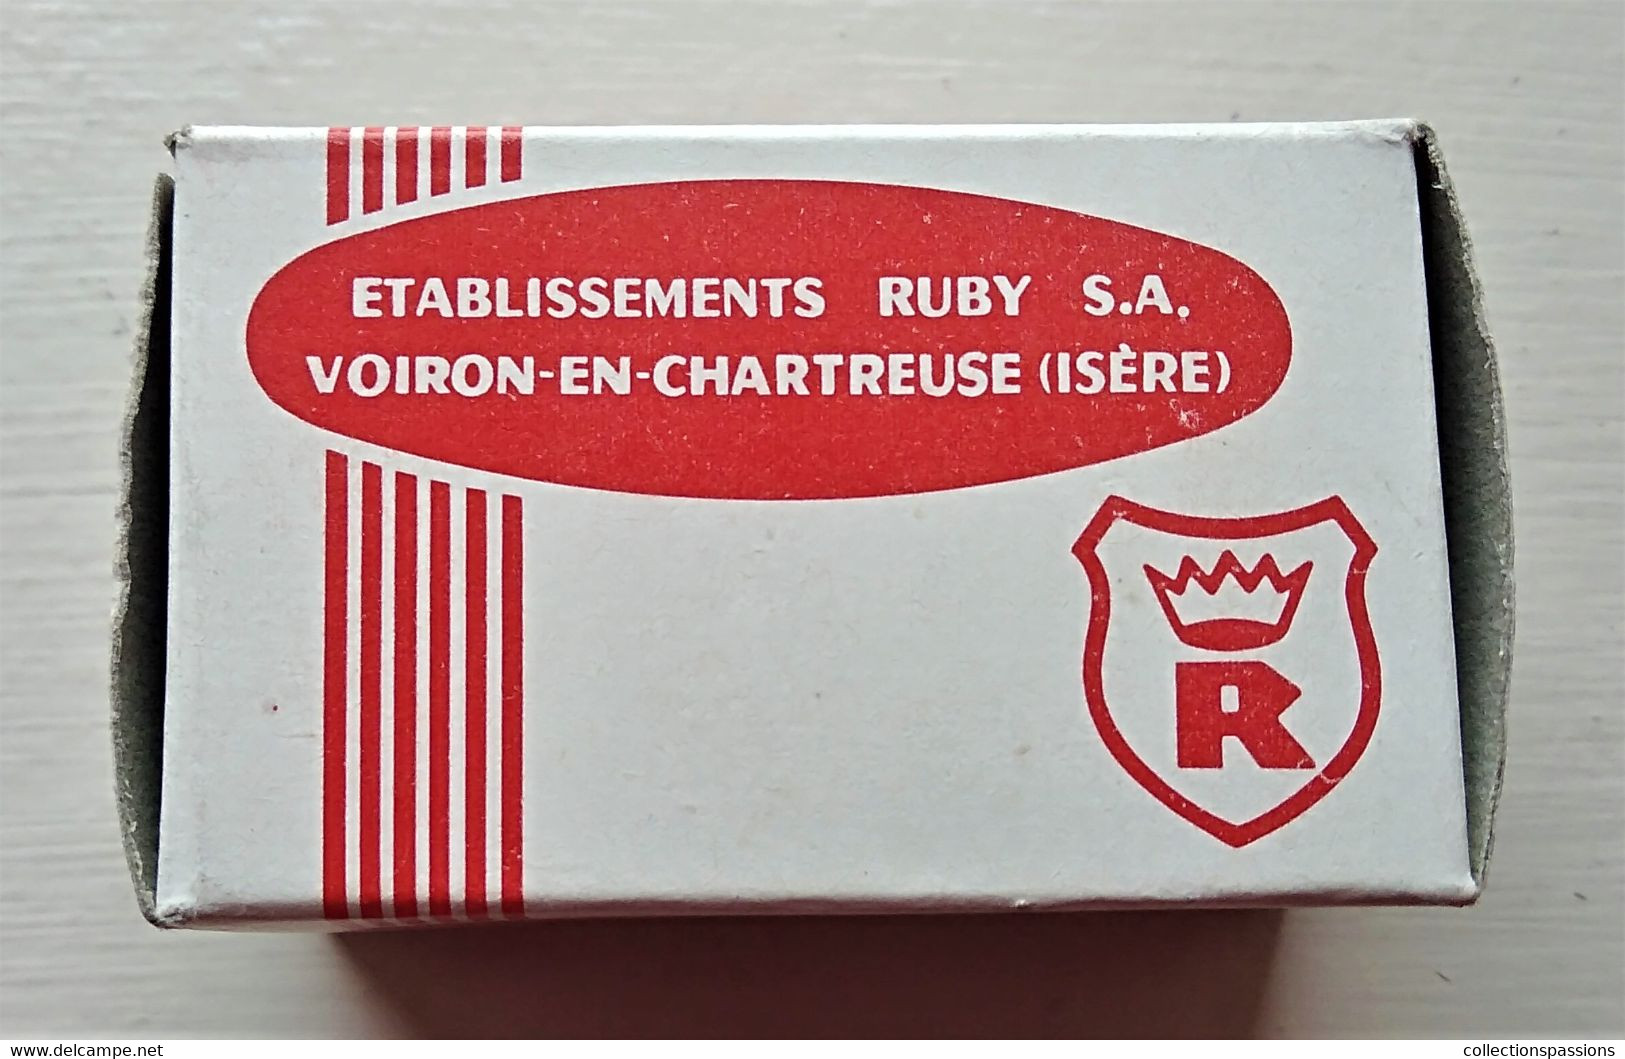 - Ancienne Boite En Carton - Bande De Gaze Hydrophile " RUBY S.A " - Objet De Collection - Pharmacie - - Medical & Dental Equipment